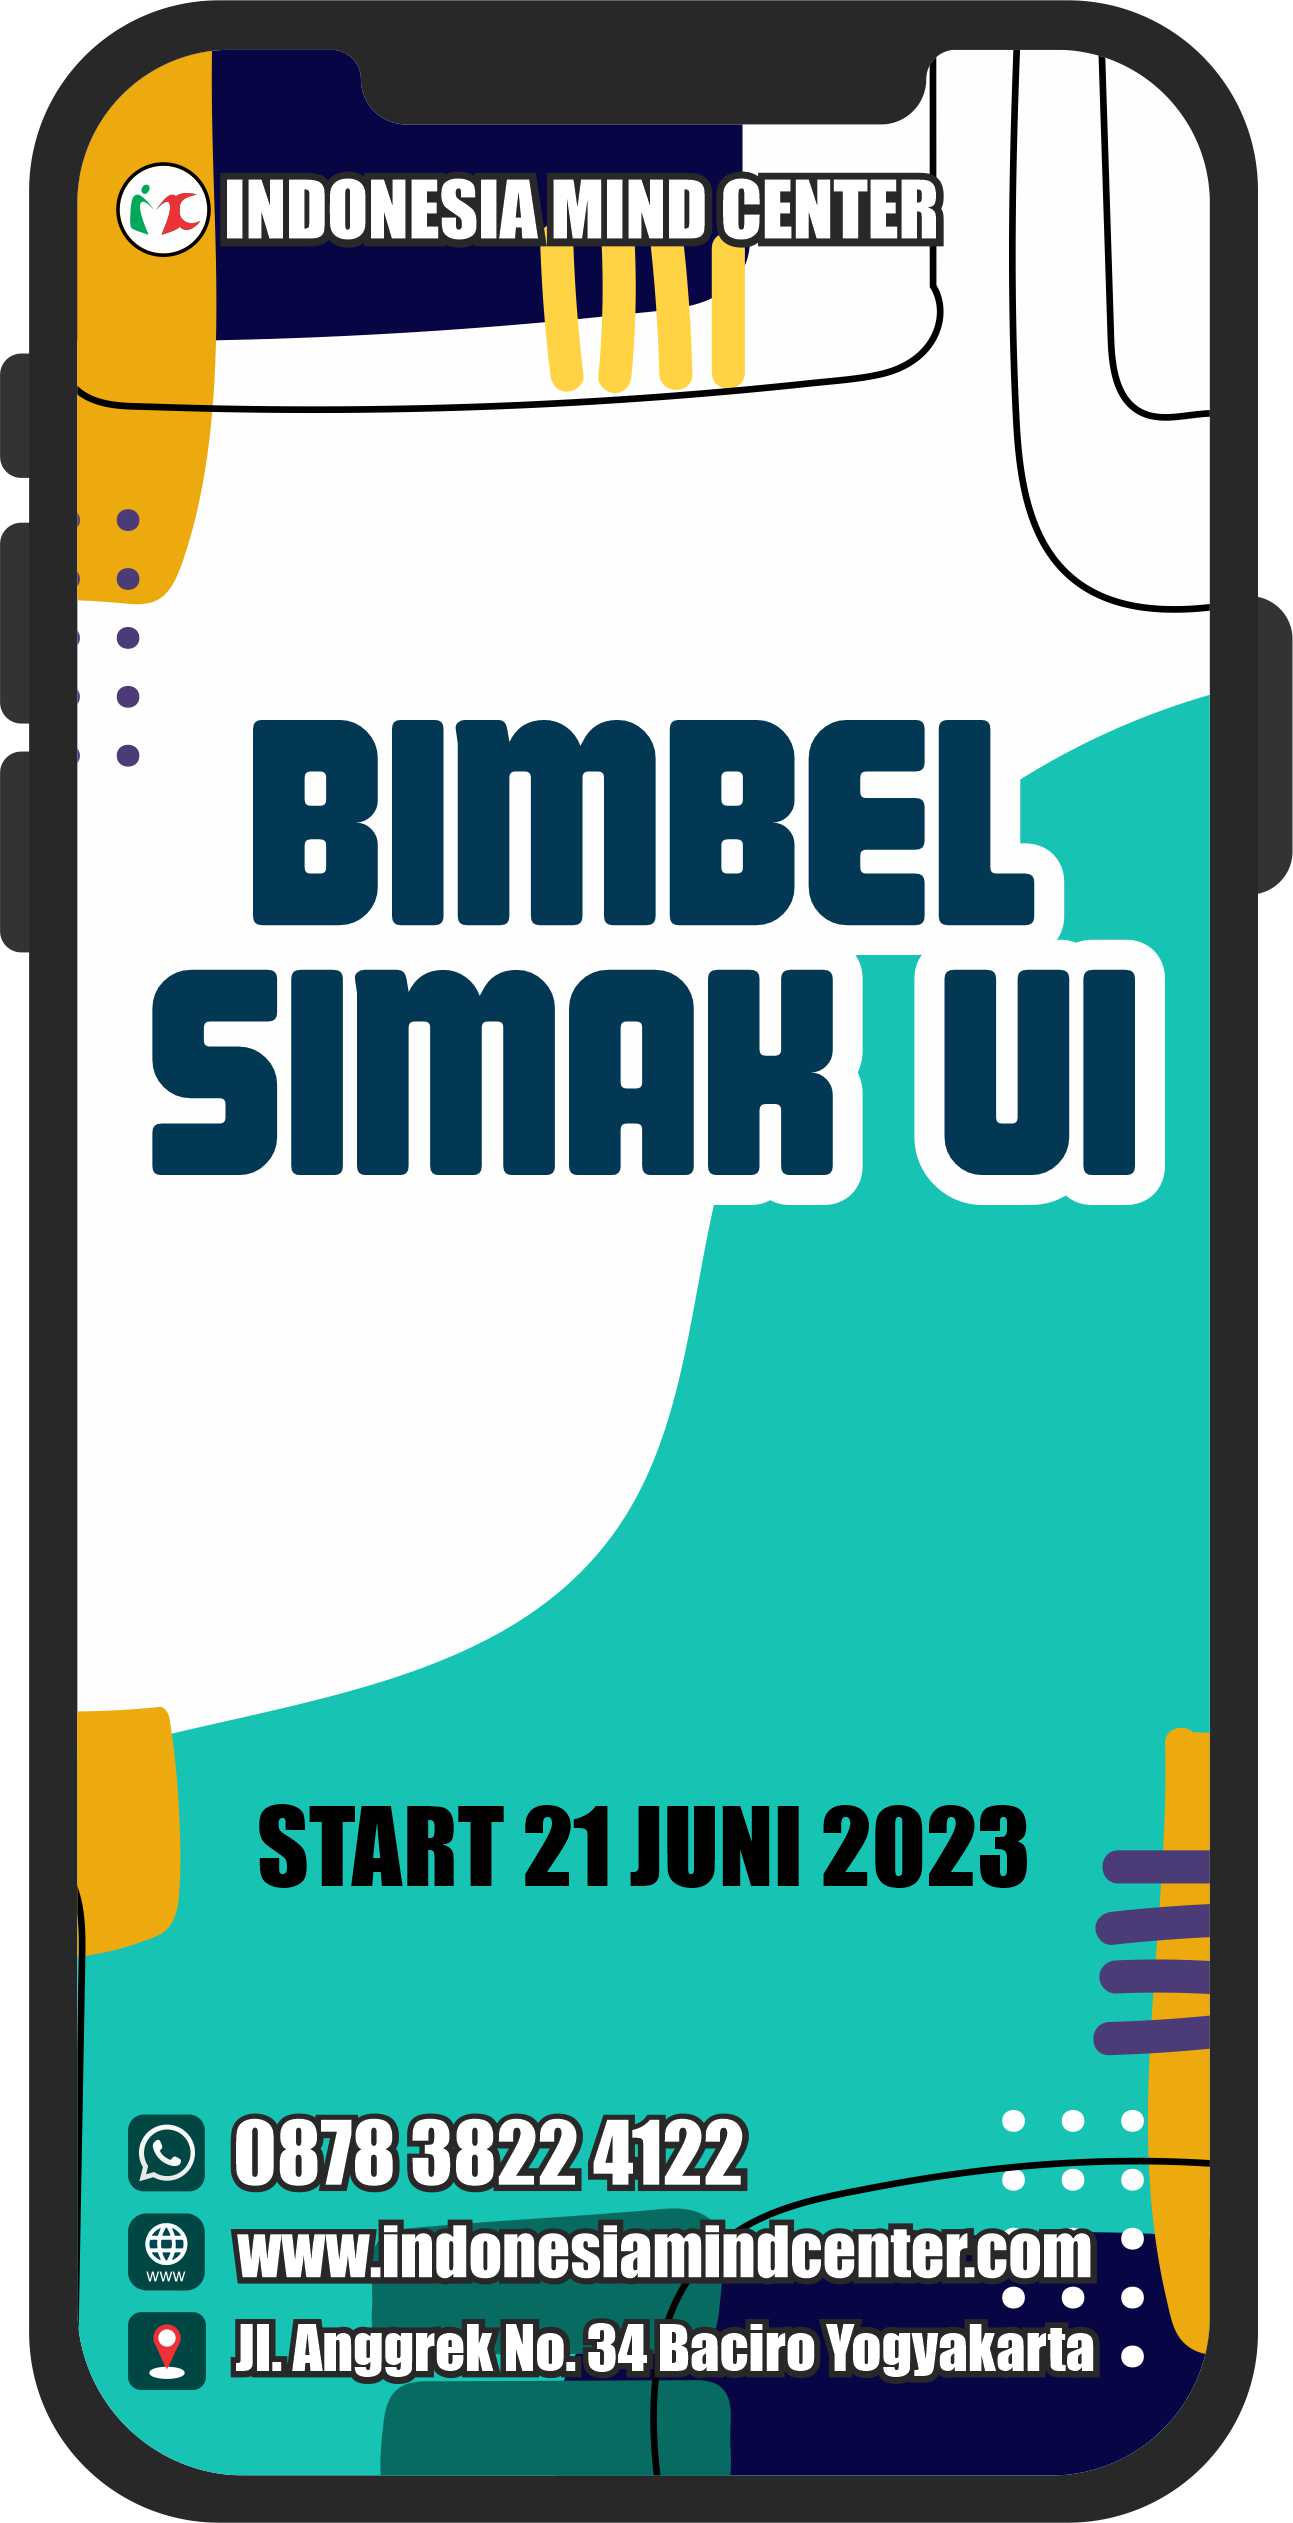 BIMBEL SIMAK UI START 21 JUNI 2023